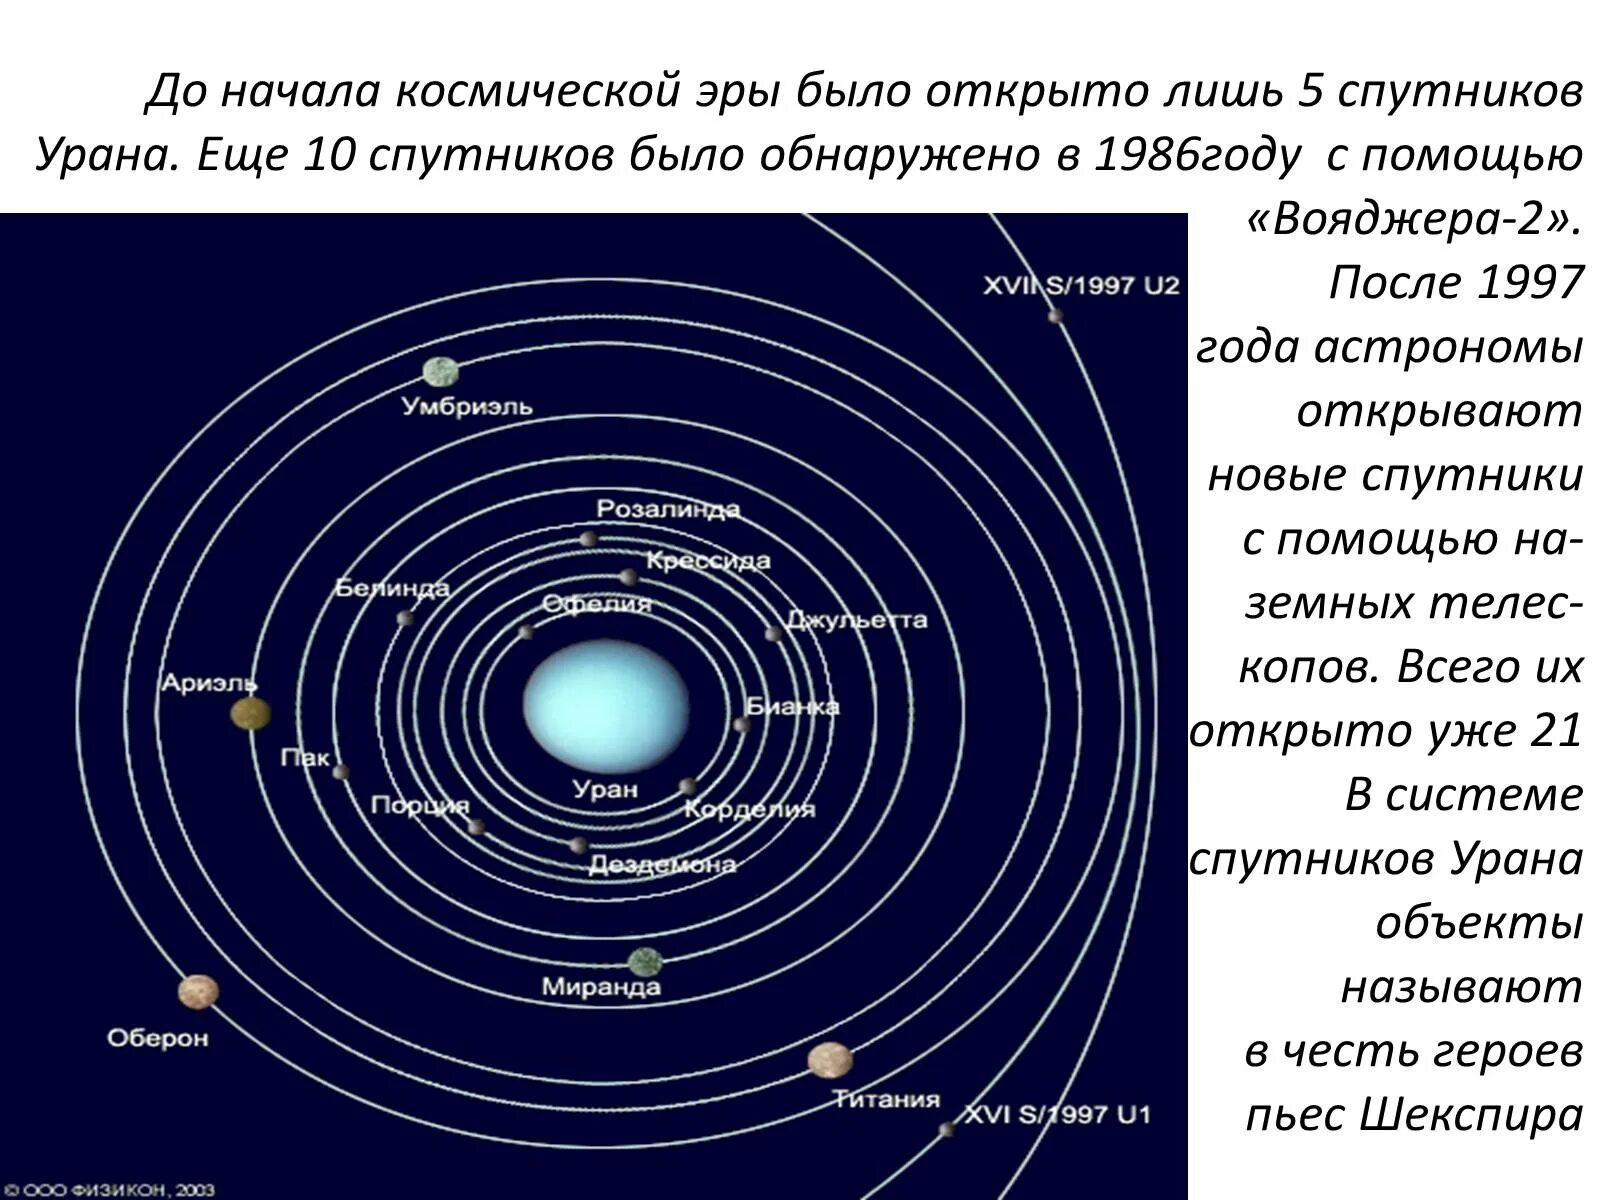 Крупнейший спутник урана. Уран Планета спутники. Крупные спутники урана. Внутренние спутники урана. 5 Спутников урана.